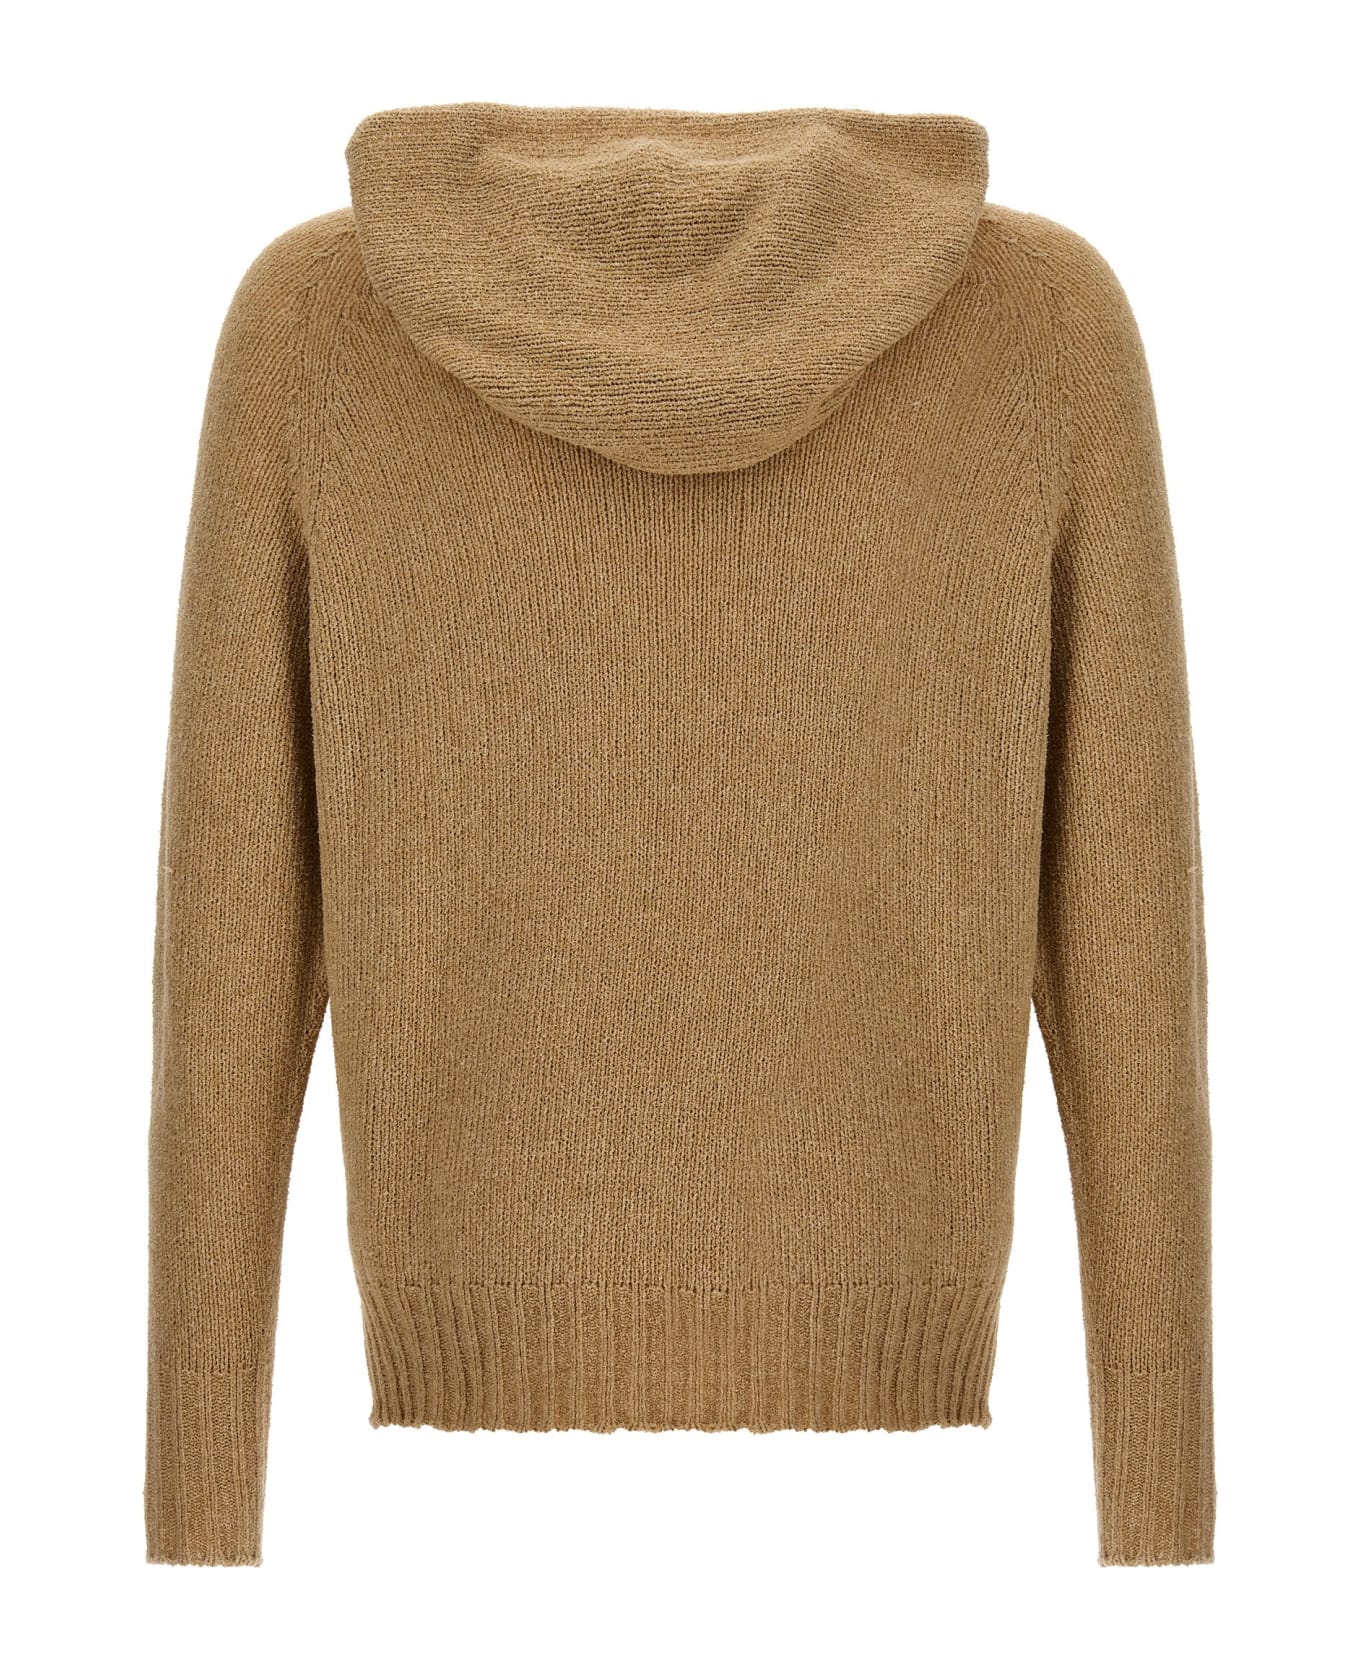 Ma'ry'ya Hooded Sweater - Beige ニットウェア